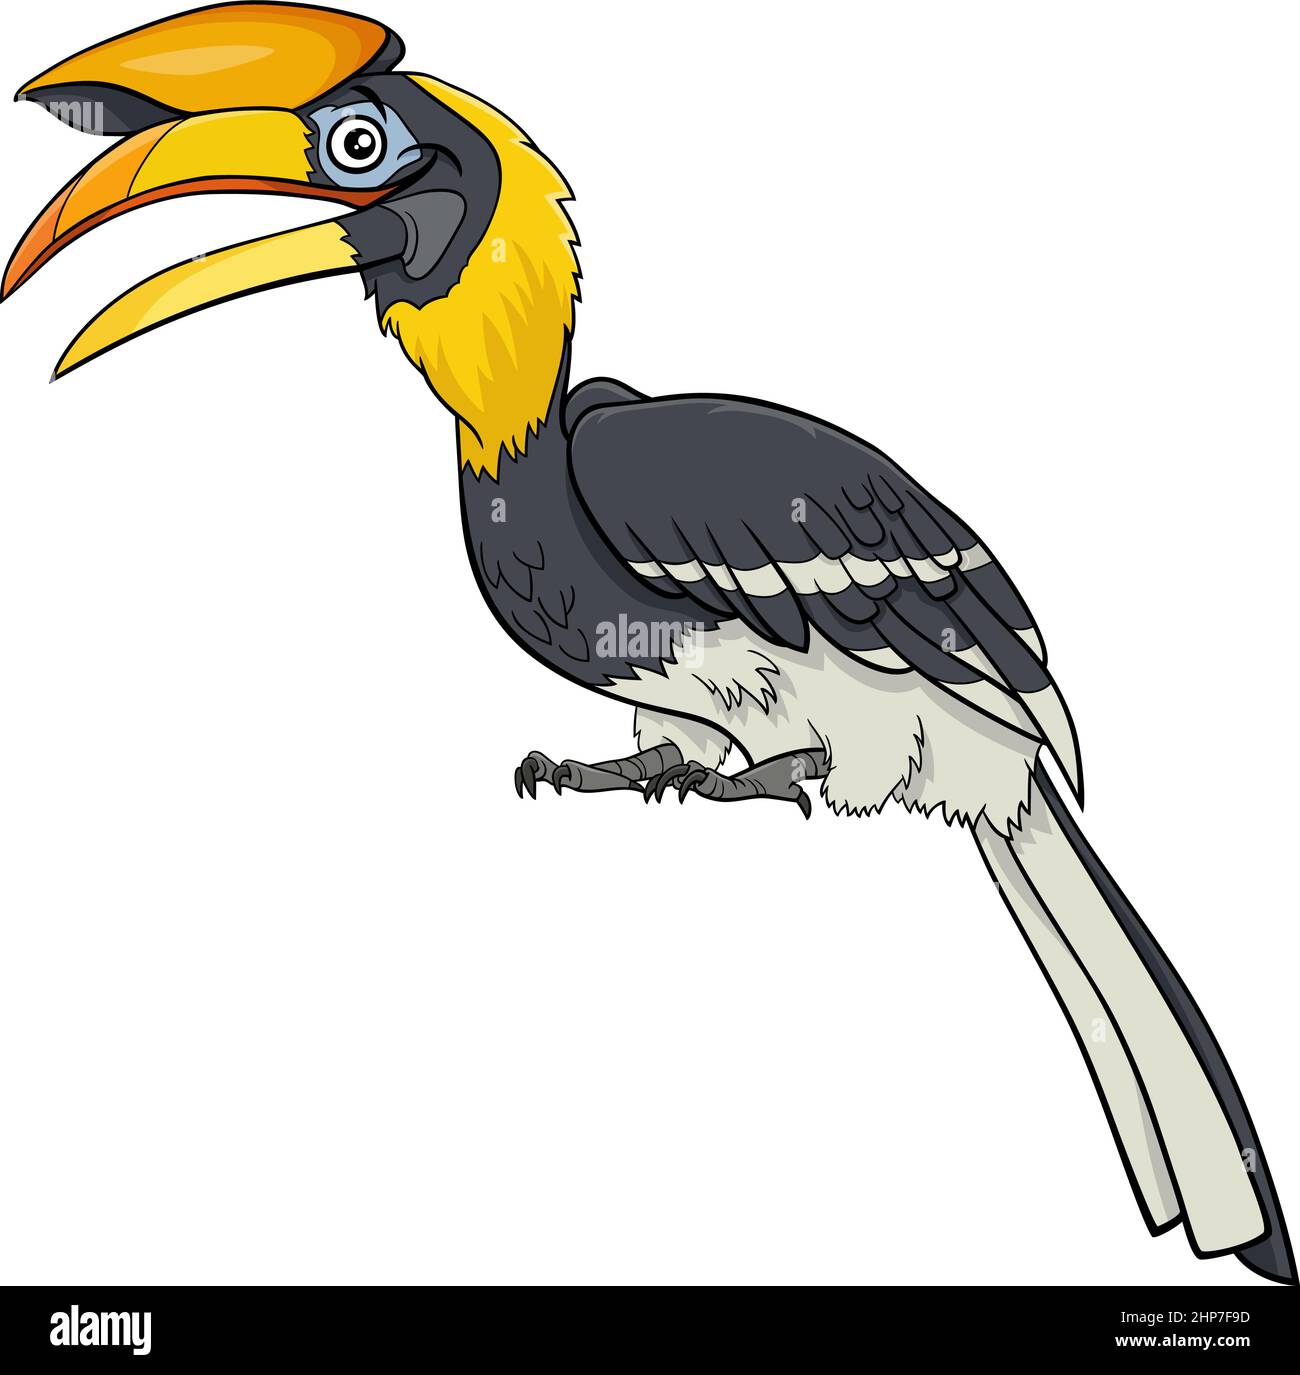 Hainschnabel Vogel Tier Charakter Cartoon Illustration Stock Vektor